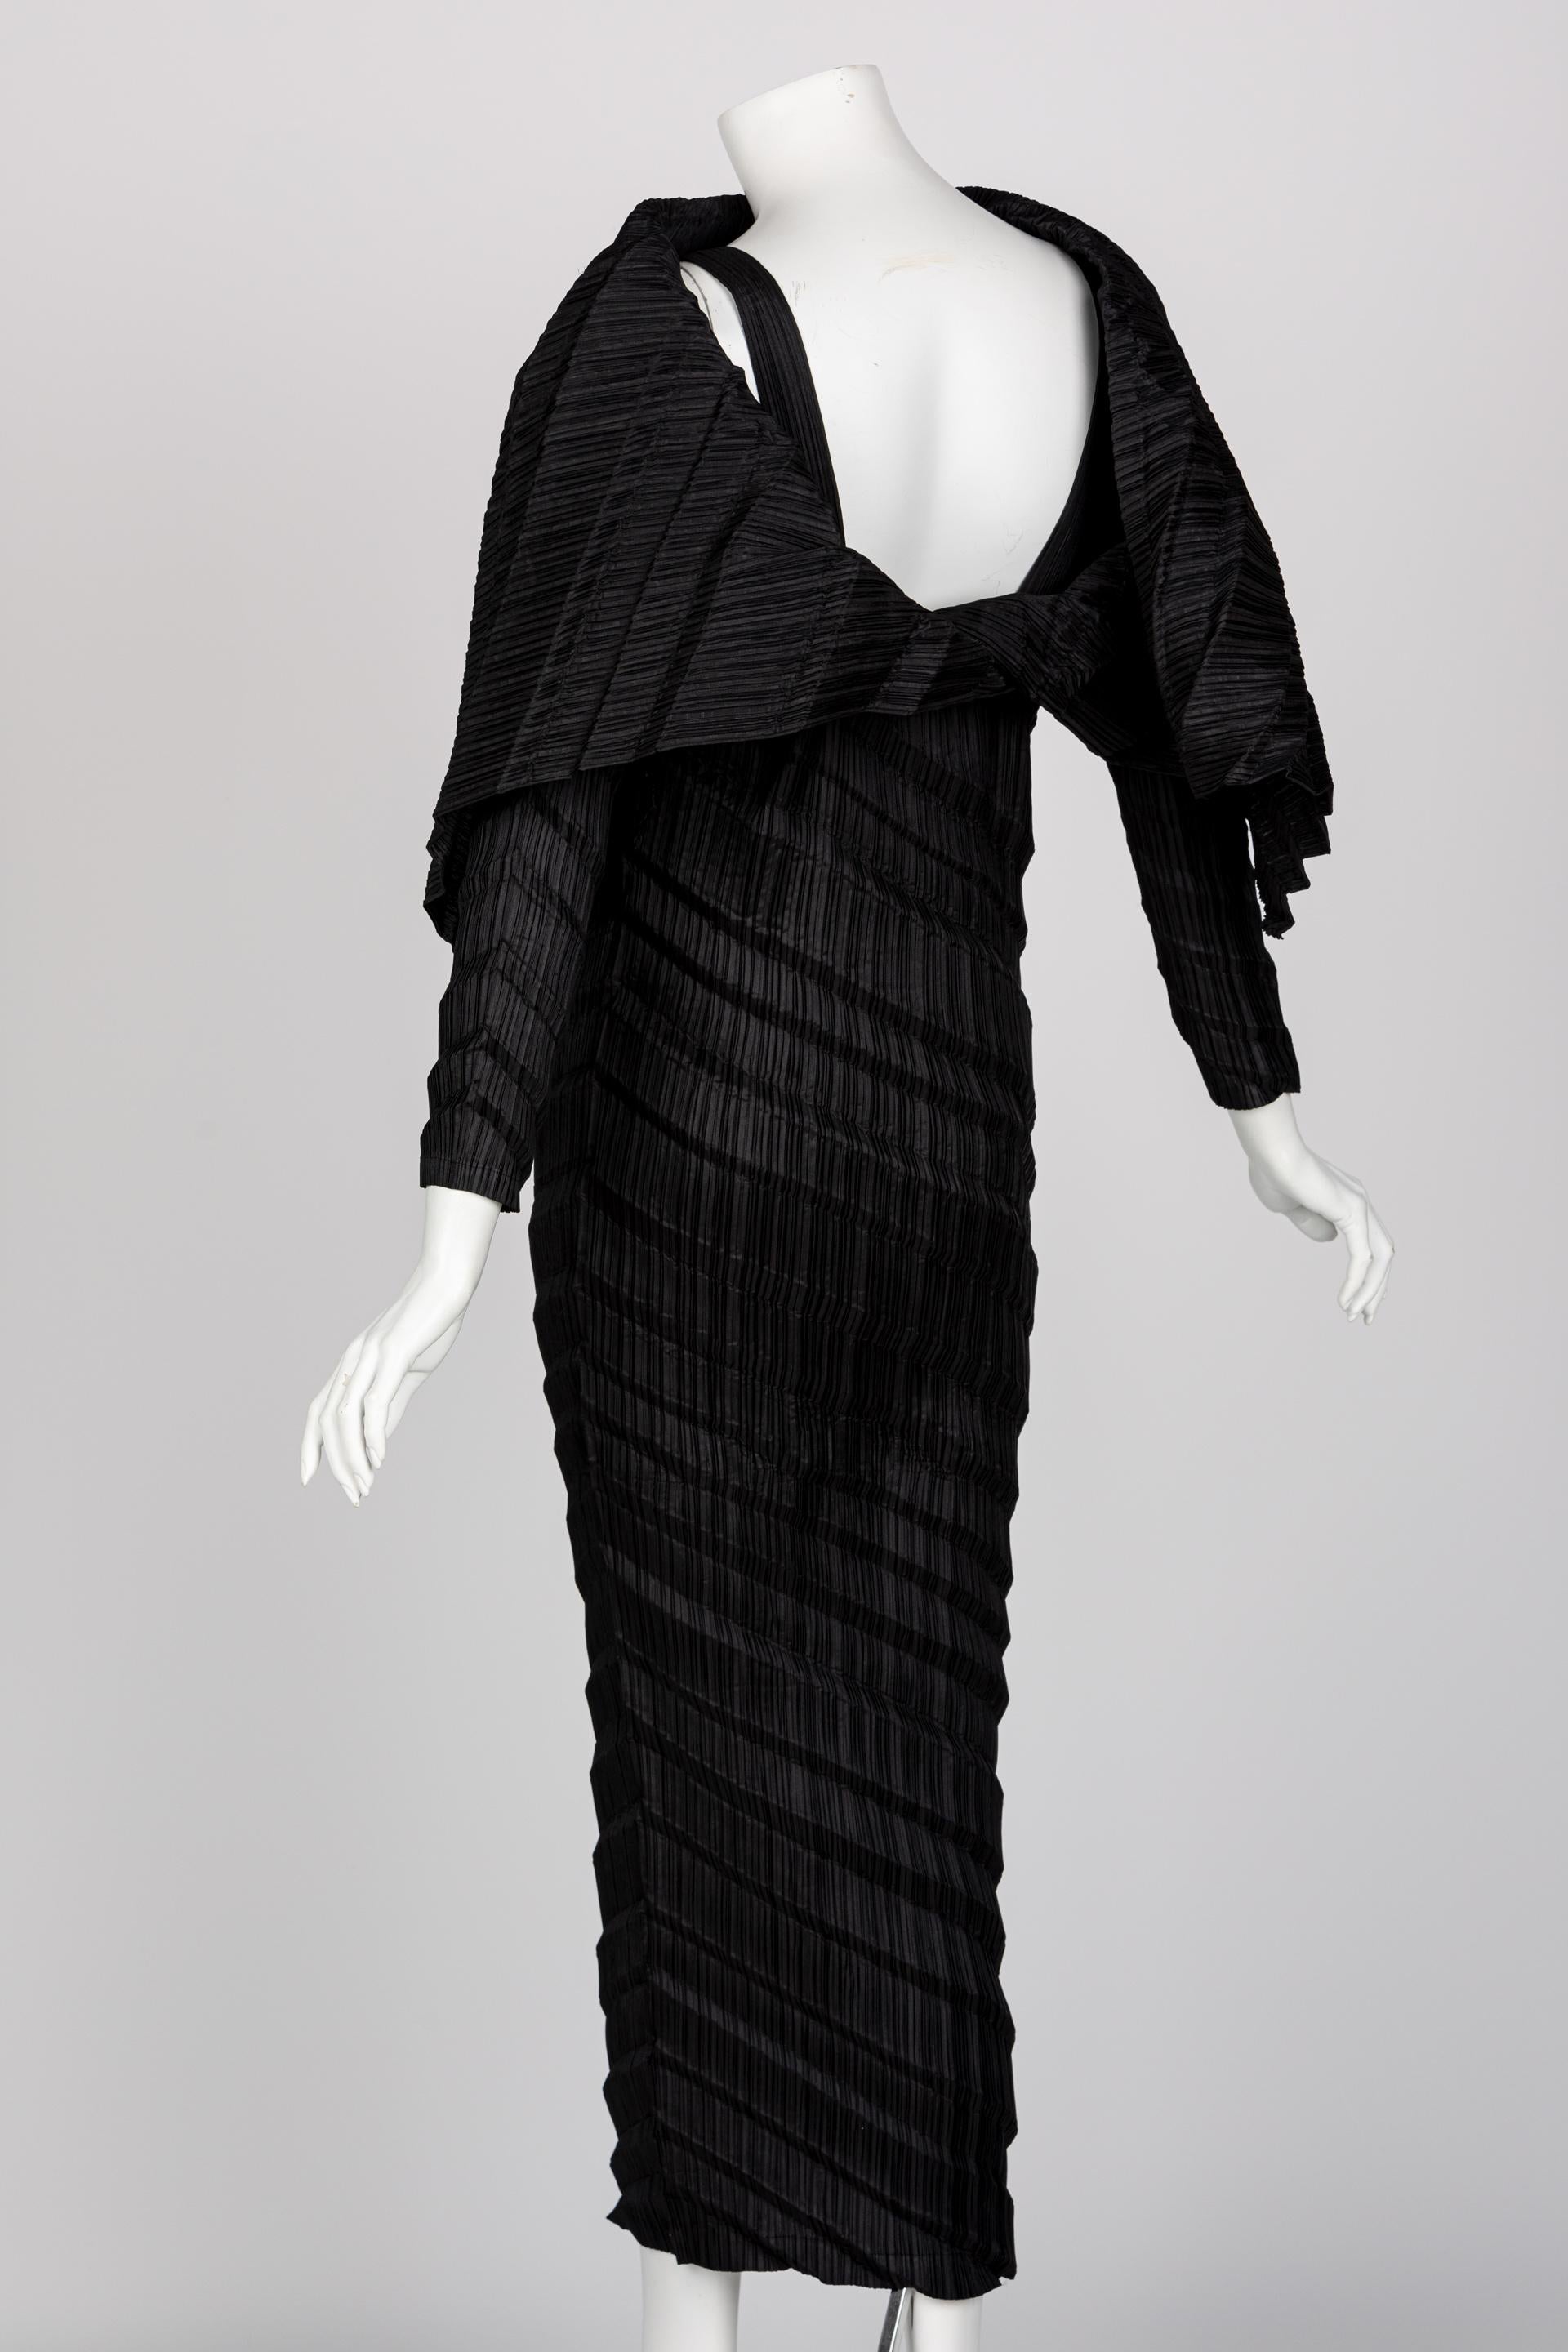 Issey Miyake Black Pleated Sculptural Dress, 1990s 4